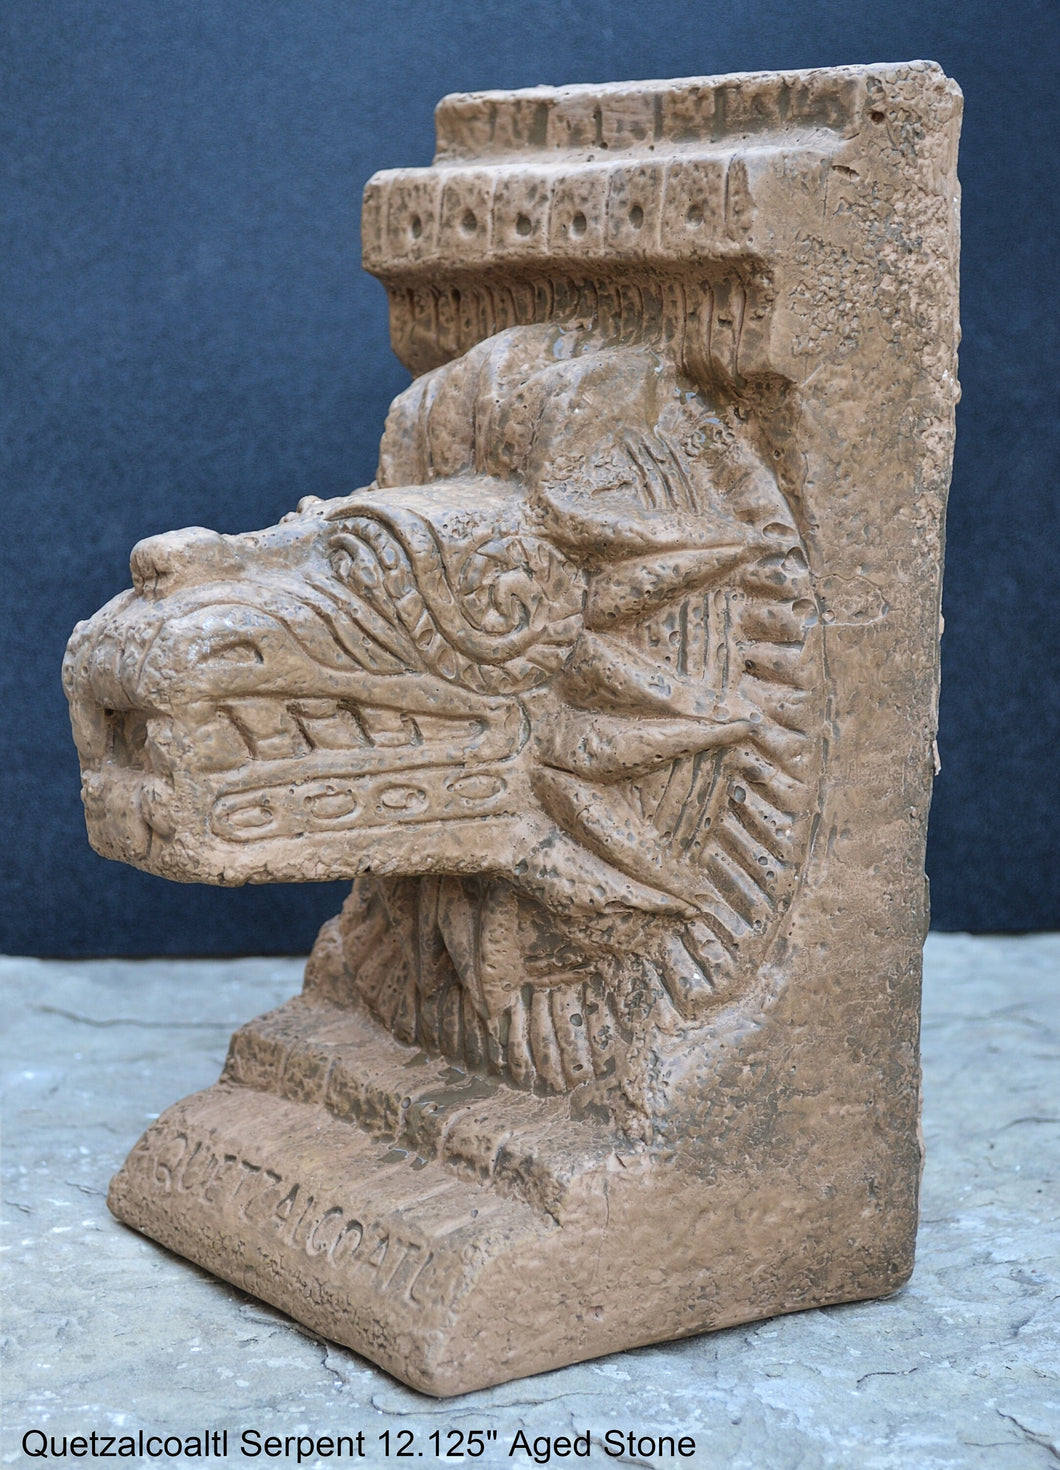 History Feathered Serpent Head of Quetzalcoaltl Aztec Maya Artifact Carved Sculpture Statue 12.125